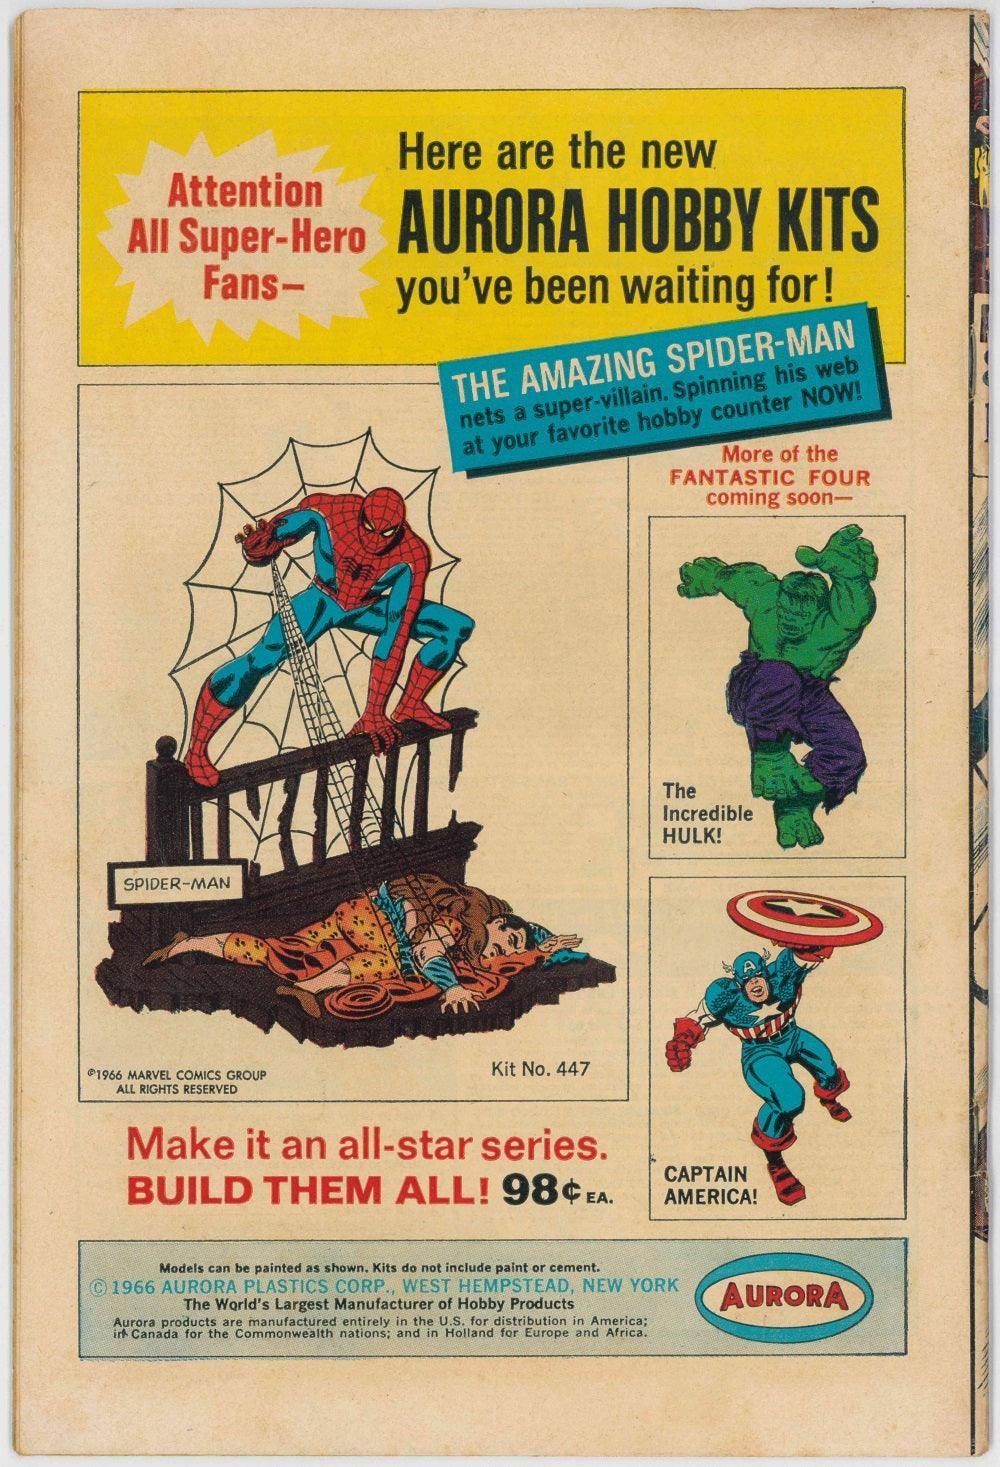 UNCANNY X-MEN (1963) #27 (VG/FN) - Kings Comics